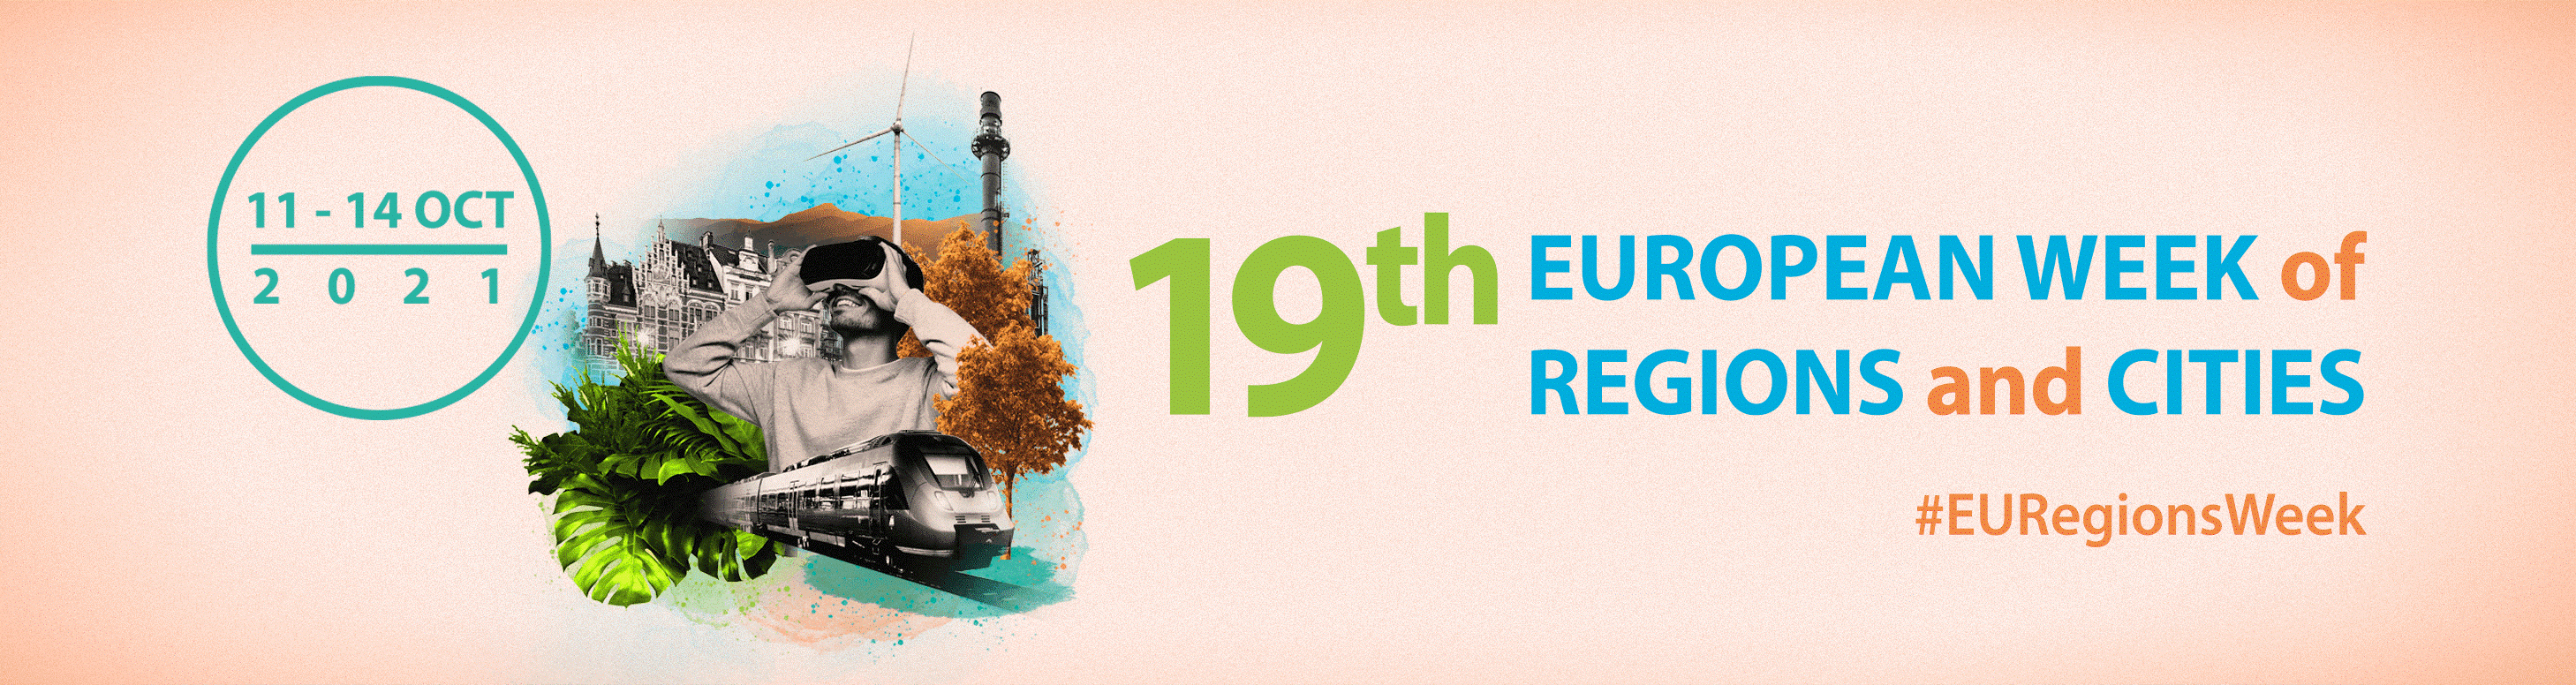 #EURegionsWeek - SAVE THE DATE!